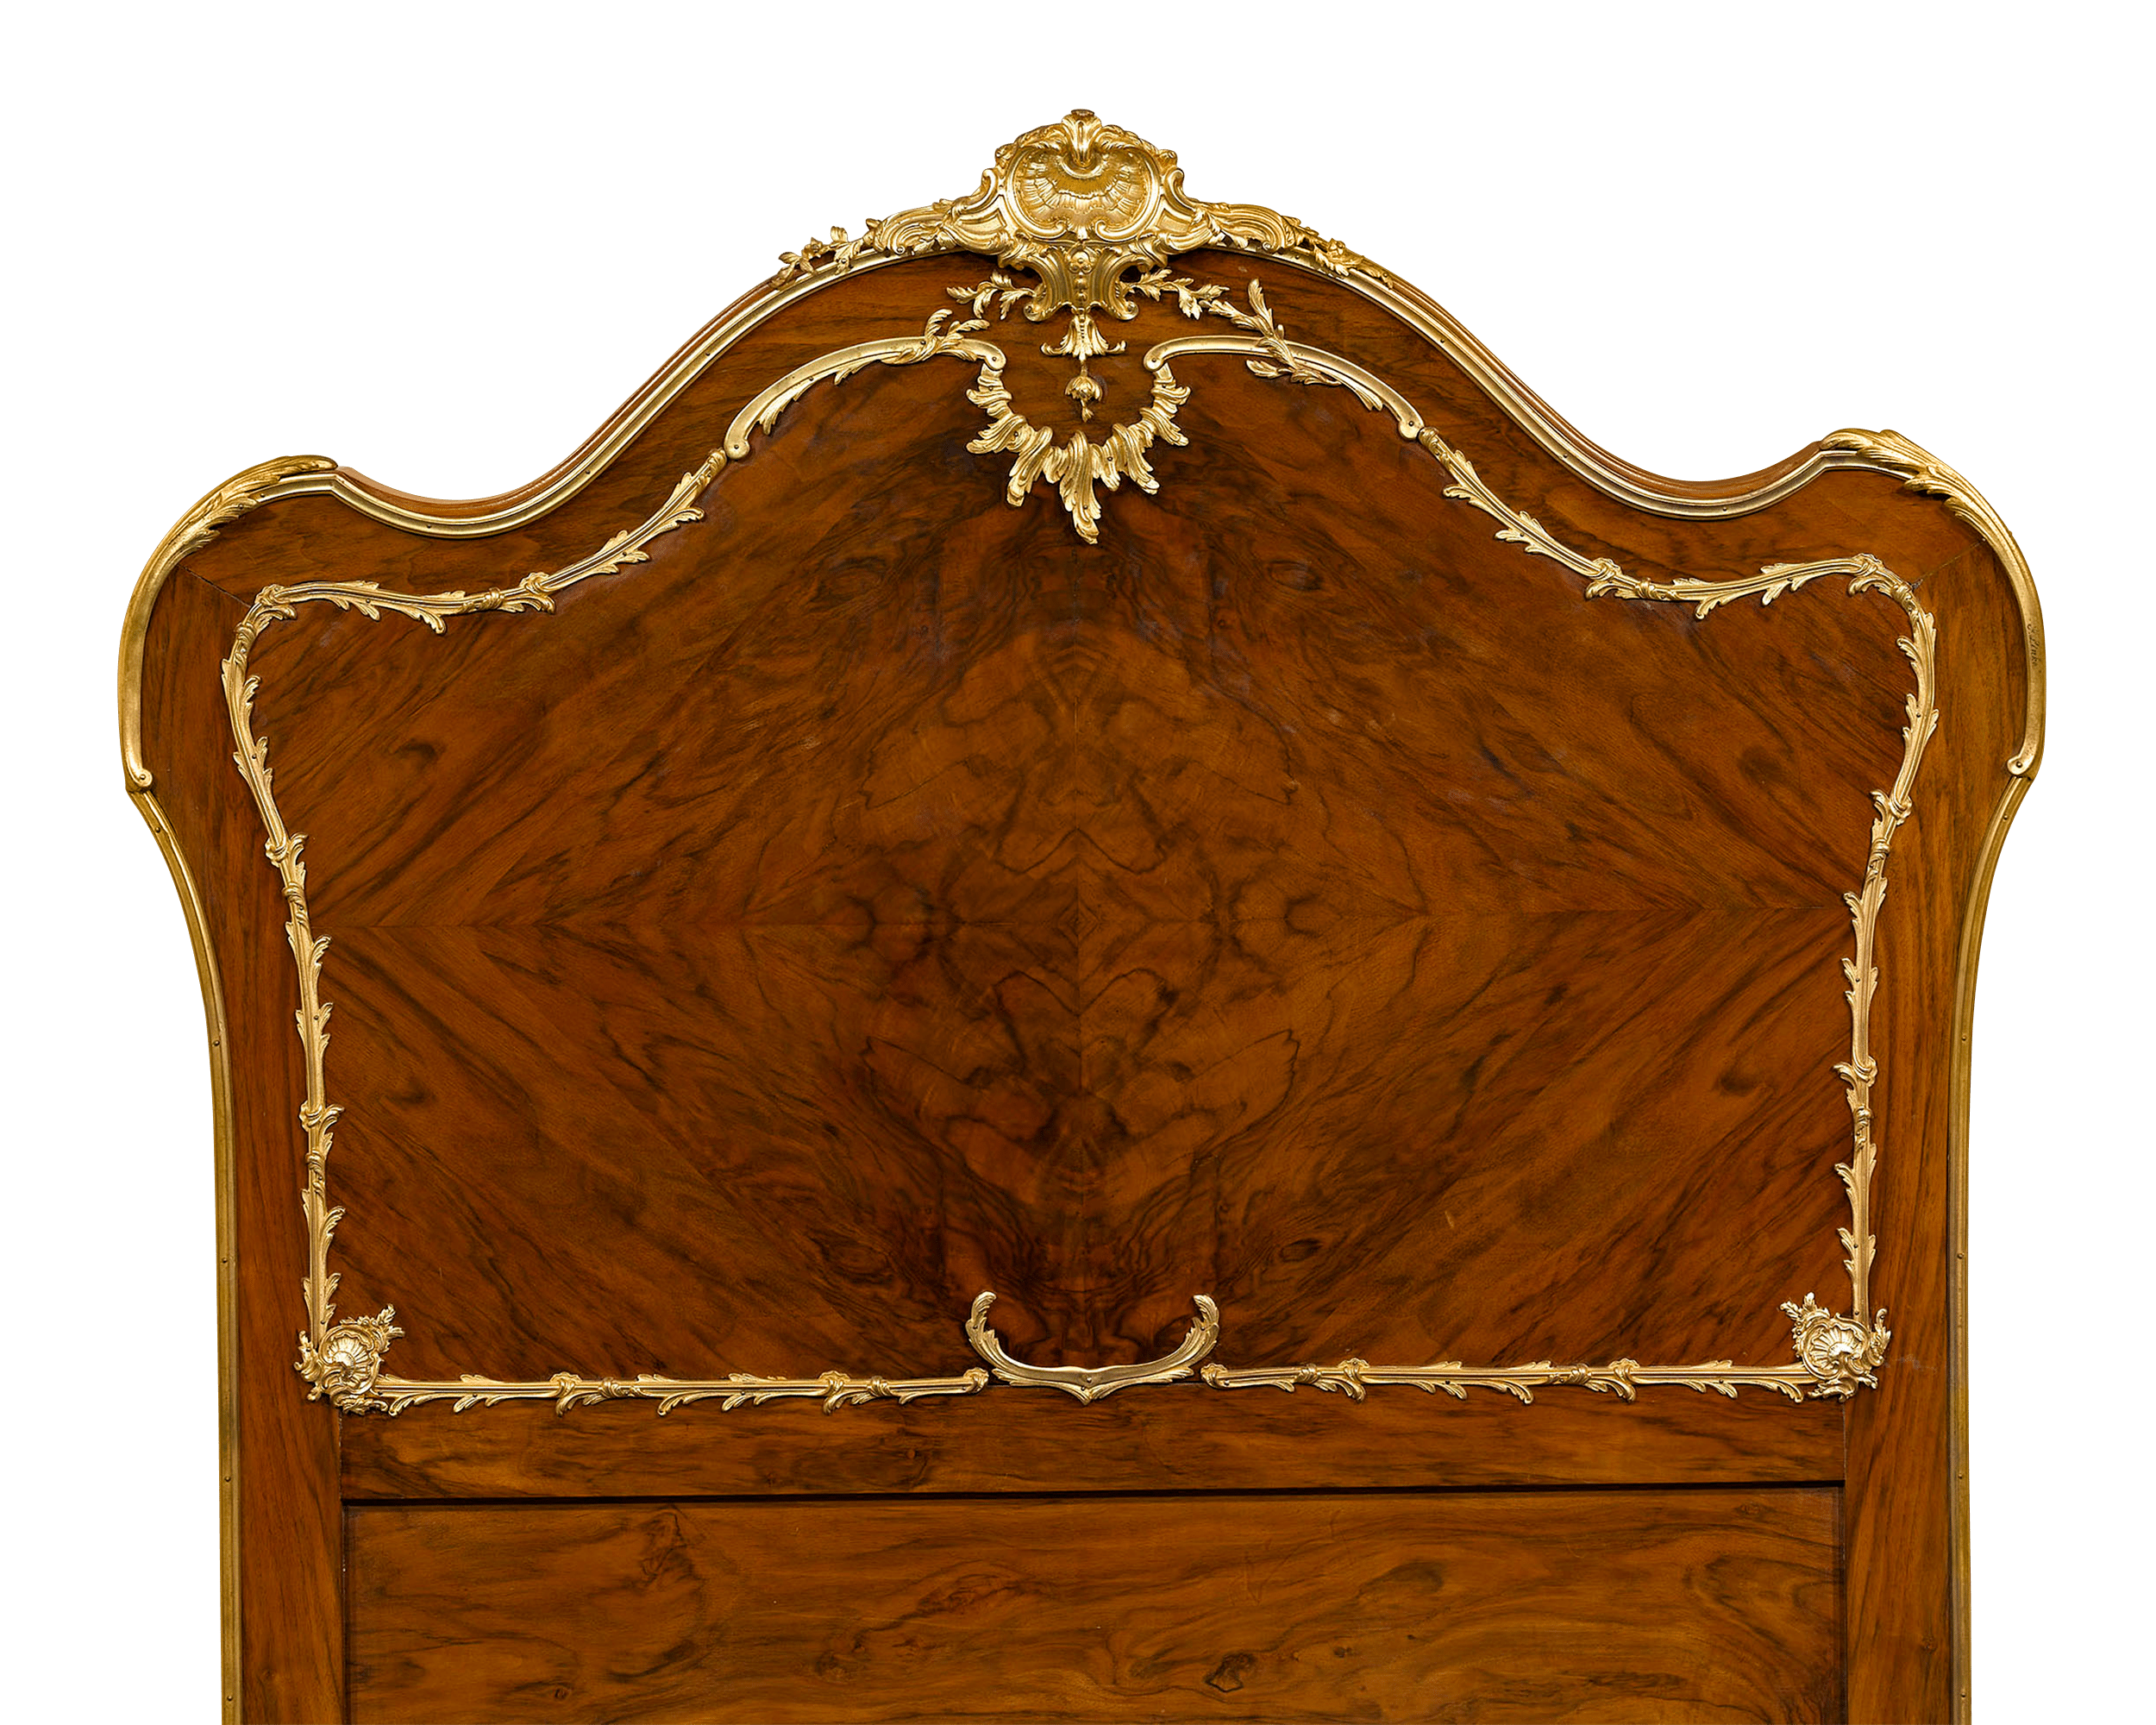 Elegant dore bronze contrasts beautifully with the mahogany